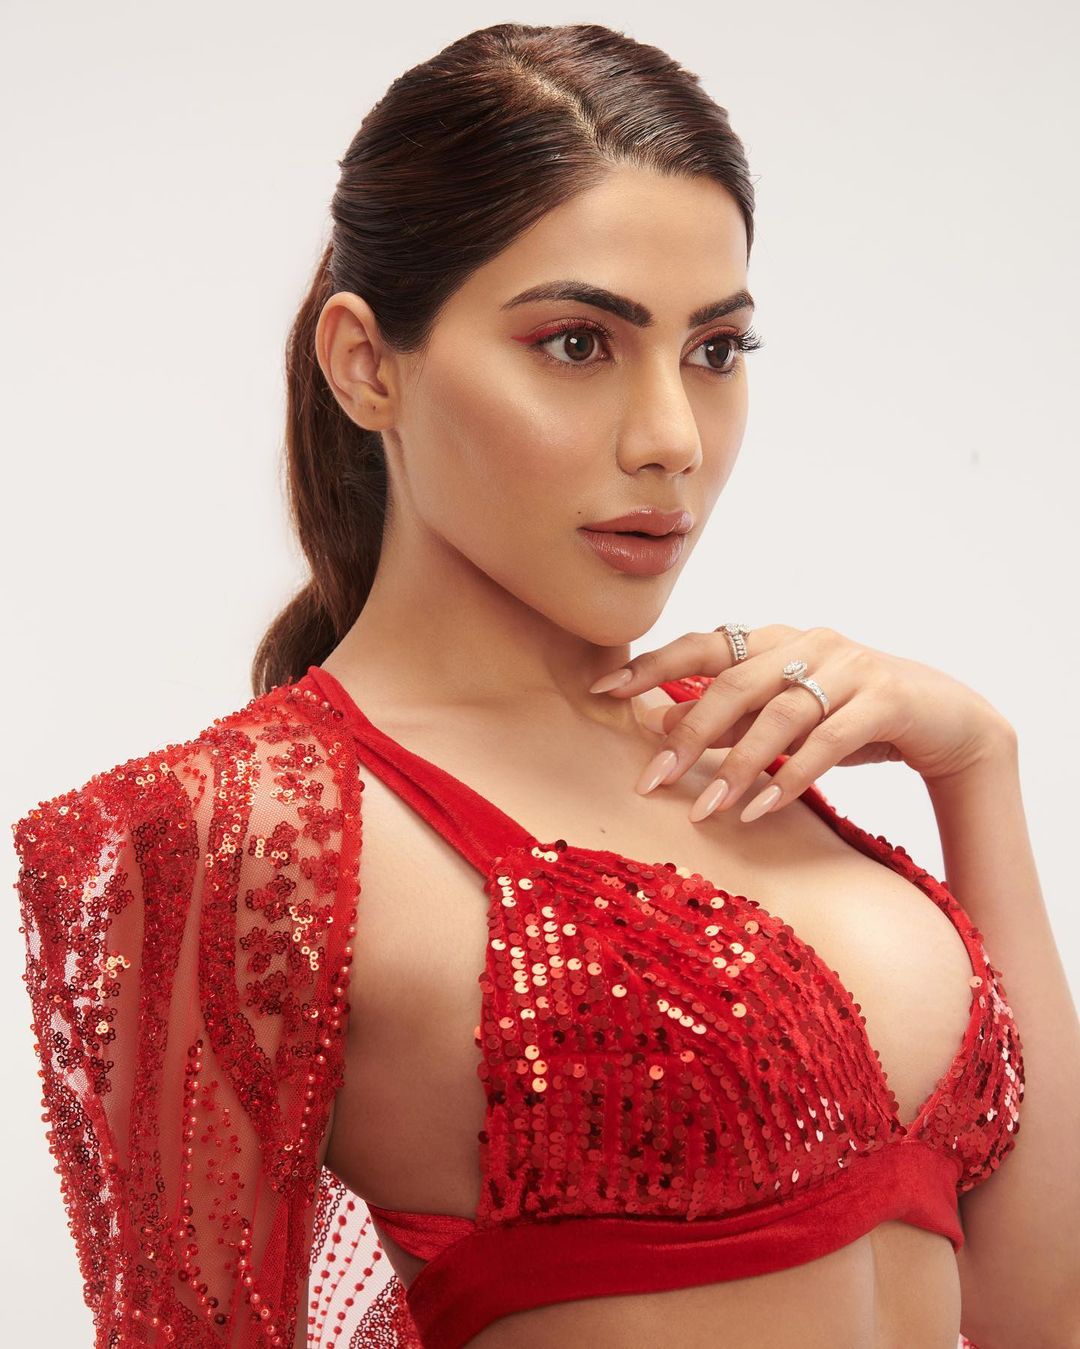 Red Saree Nikki Tamboli